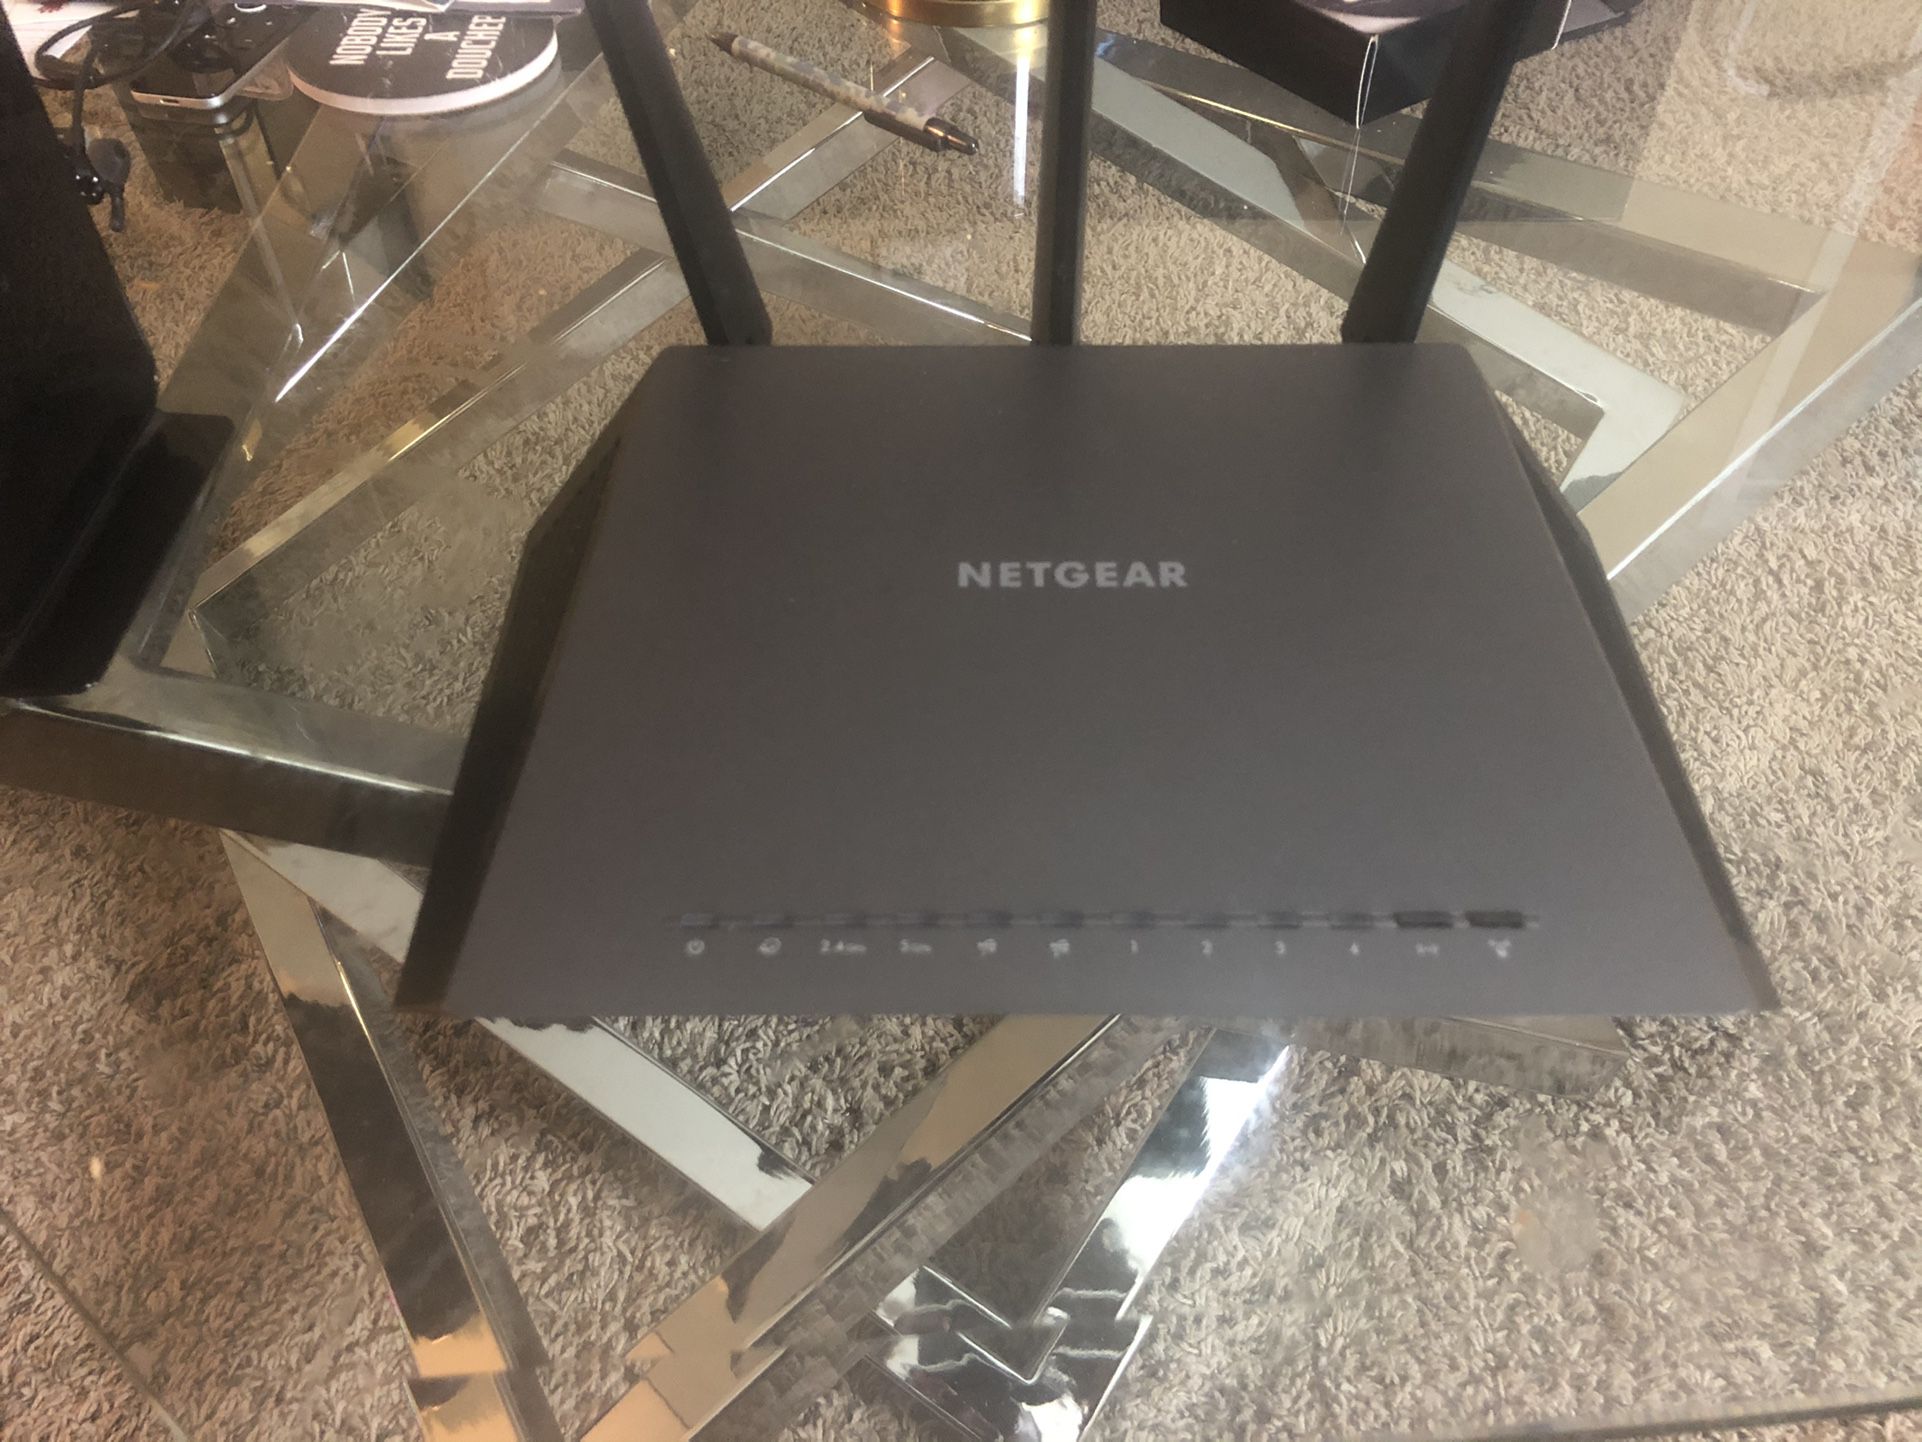 Netgear NIGHTHAWK AC1900 Wifi Router